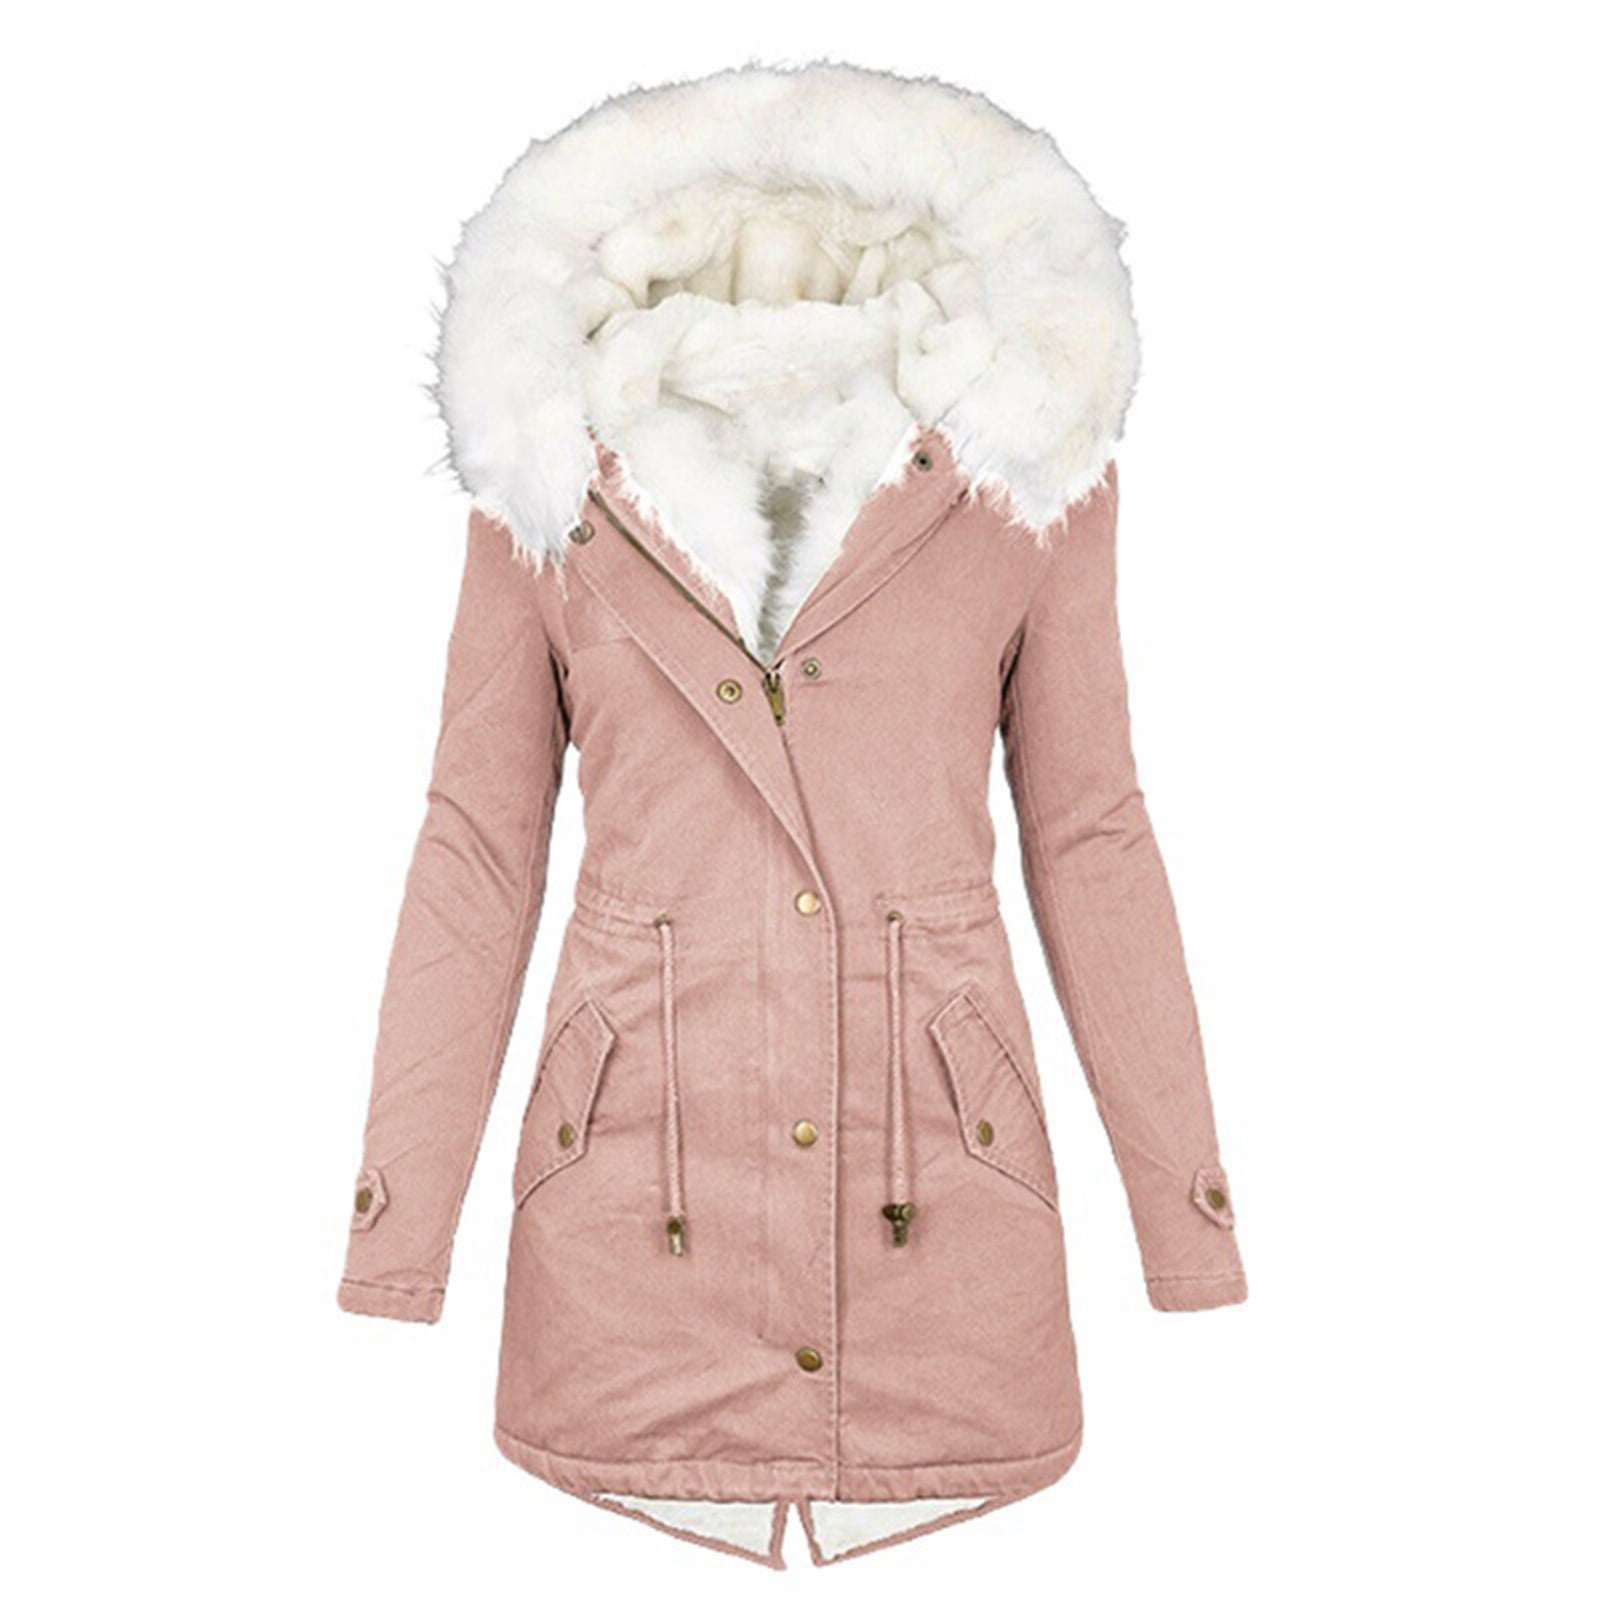 Women's Thicken Military Parka Jacket Winter Warm Fleece Cotton Long ...